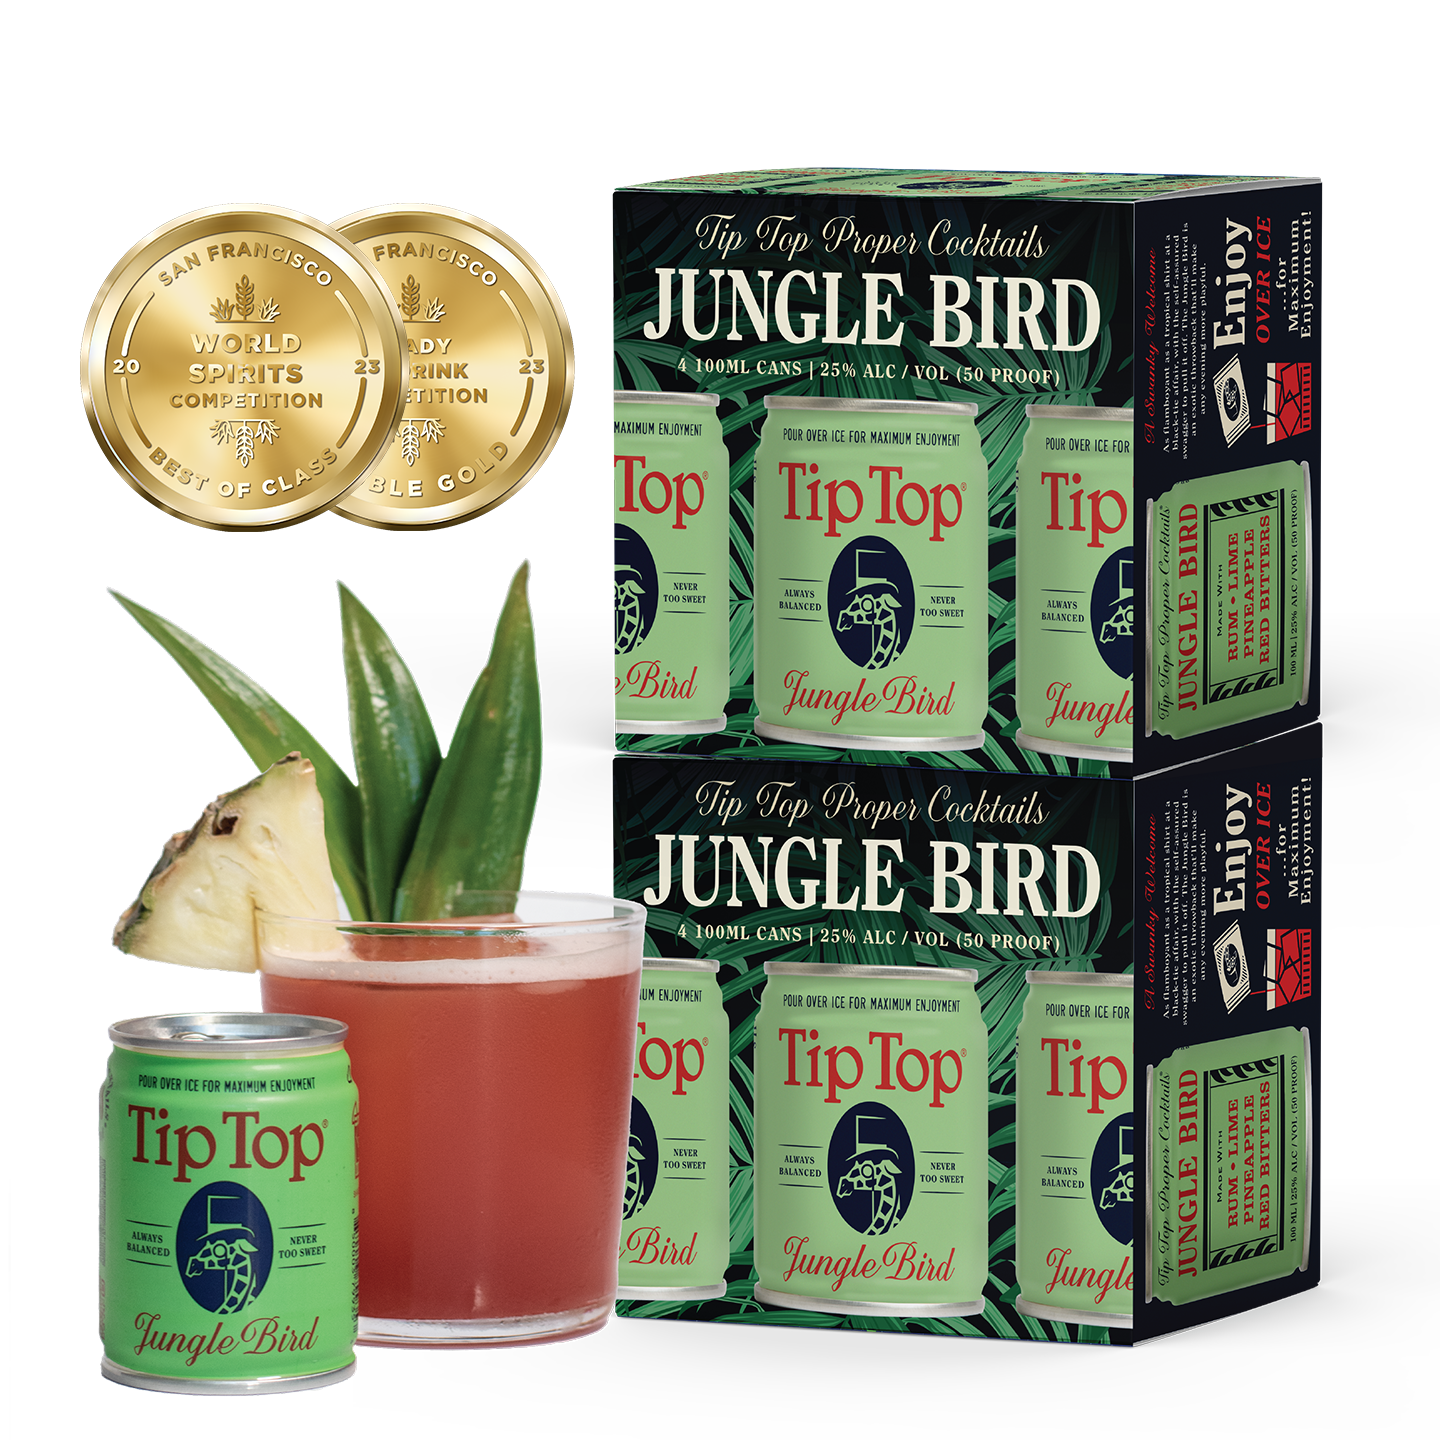 Tip Top Proper Cocktails Jungle Bird